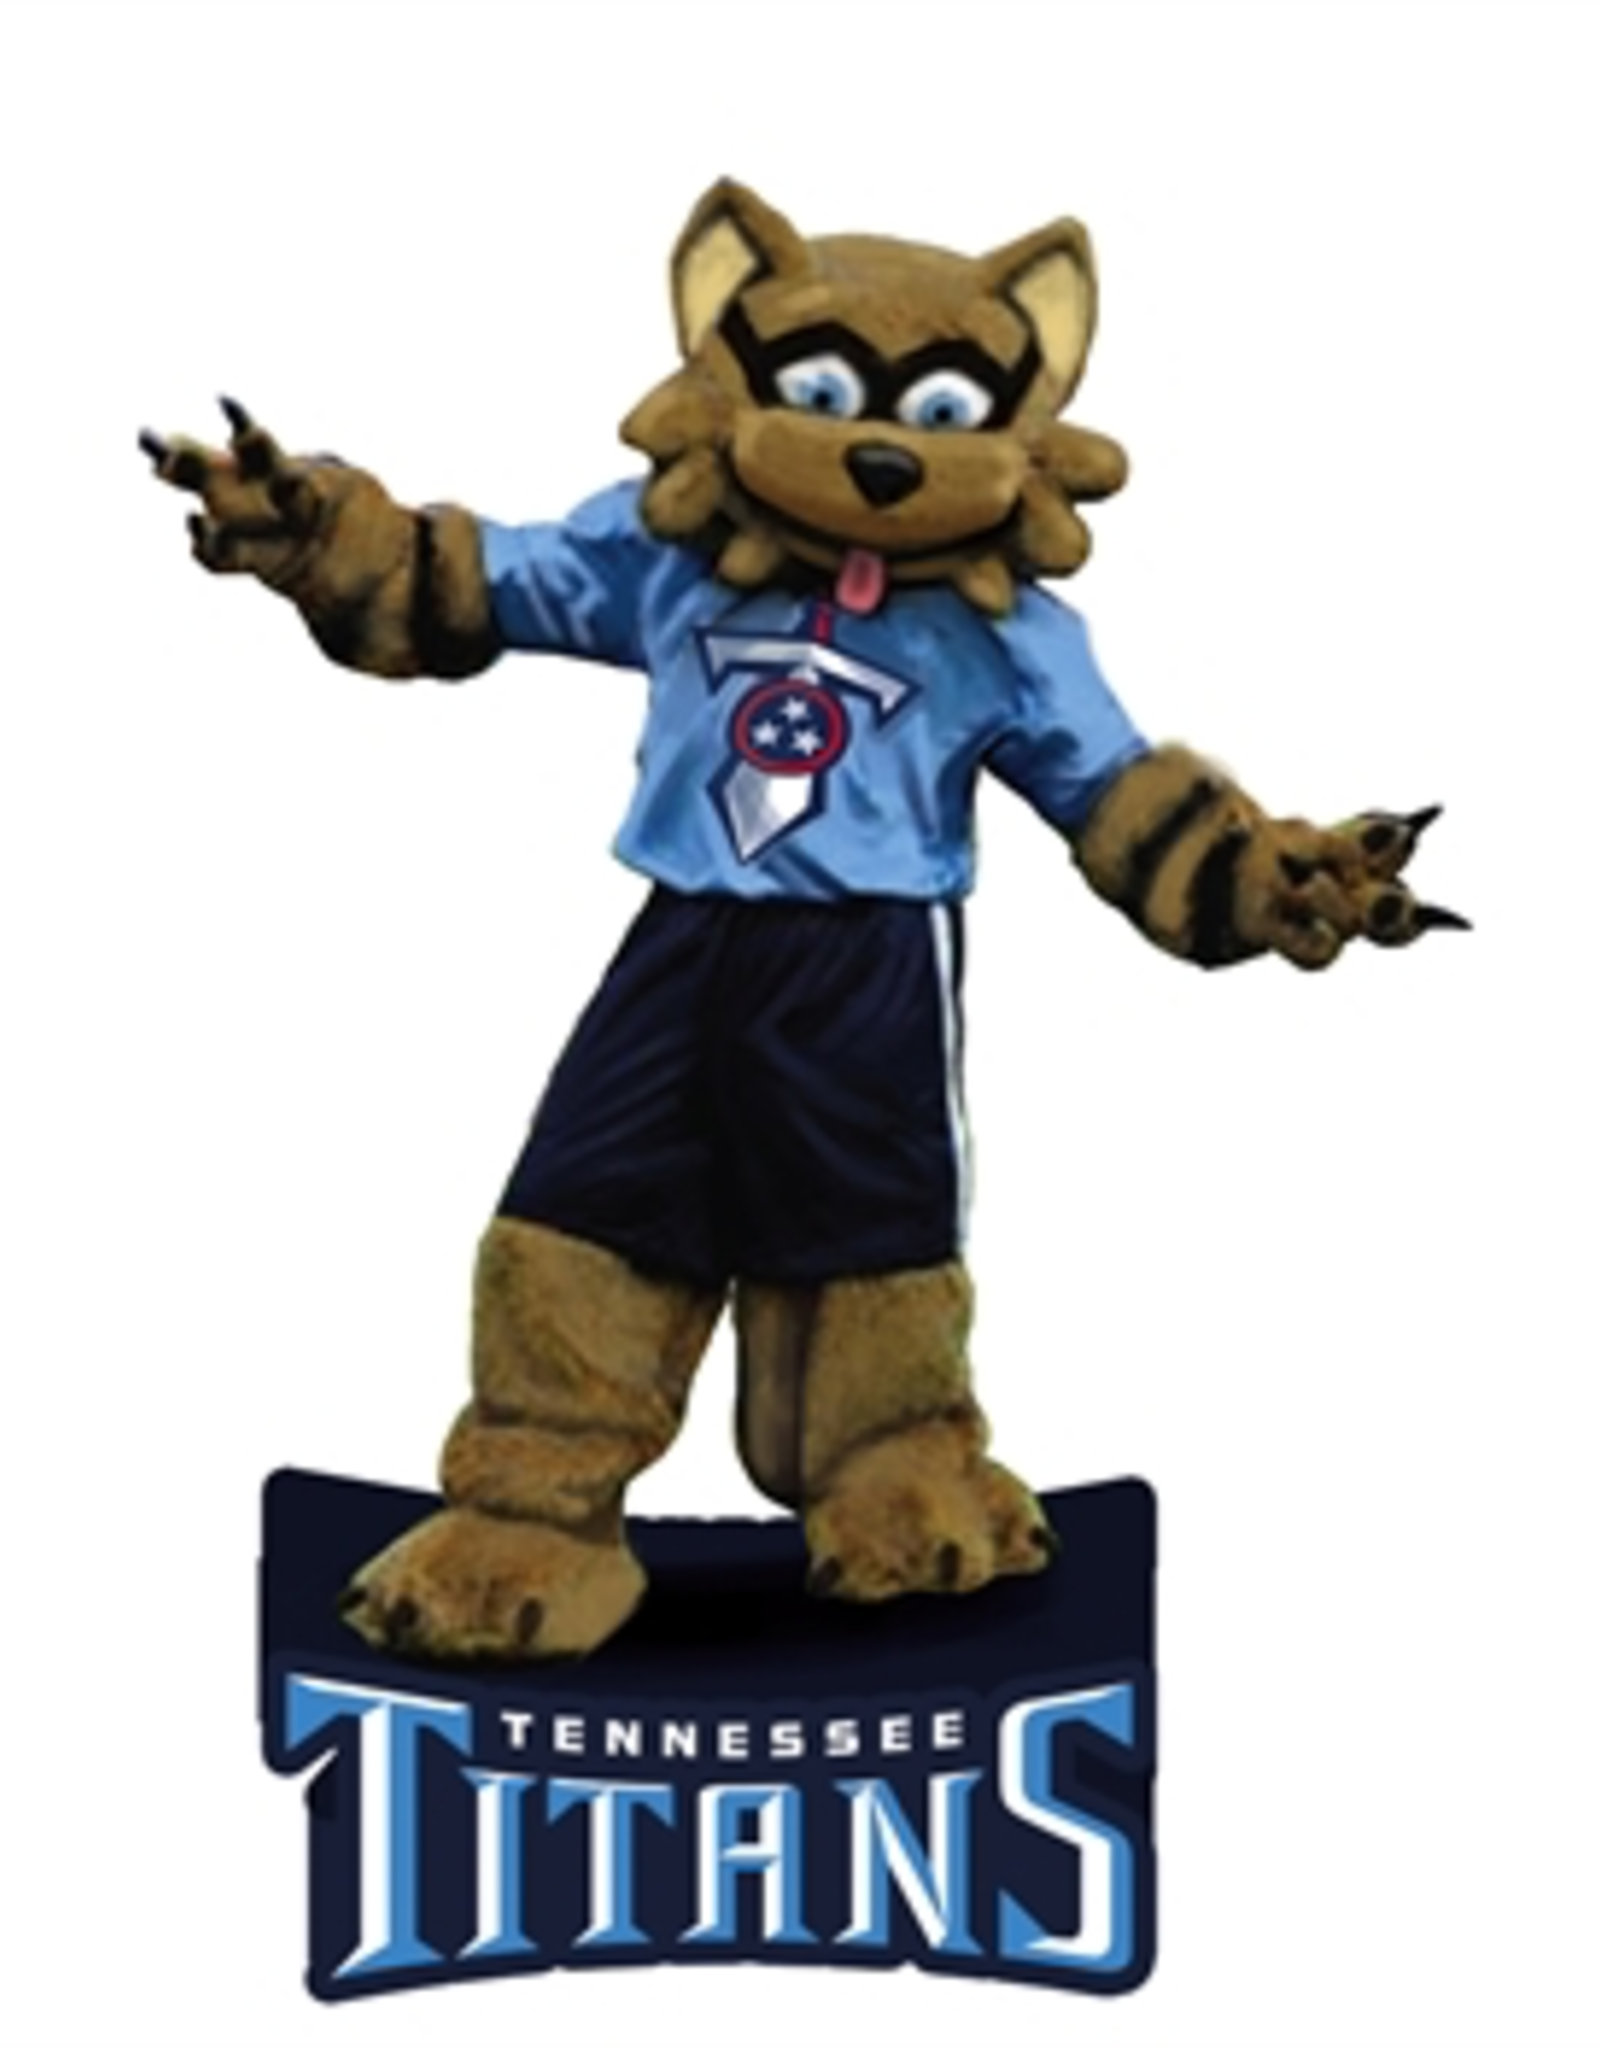 EVERGREEN Tennessee Titans Mascot Statue